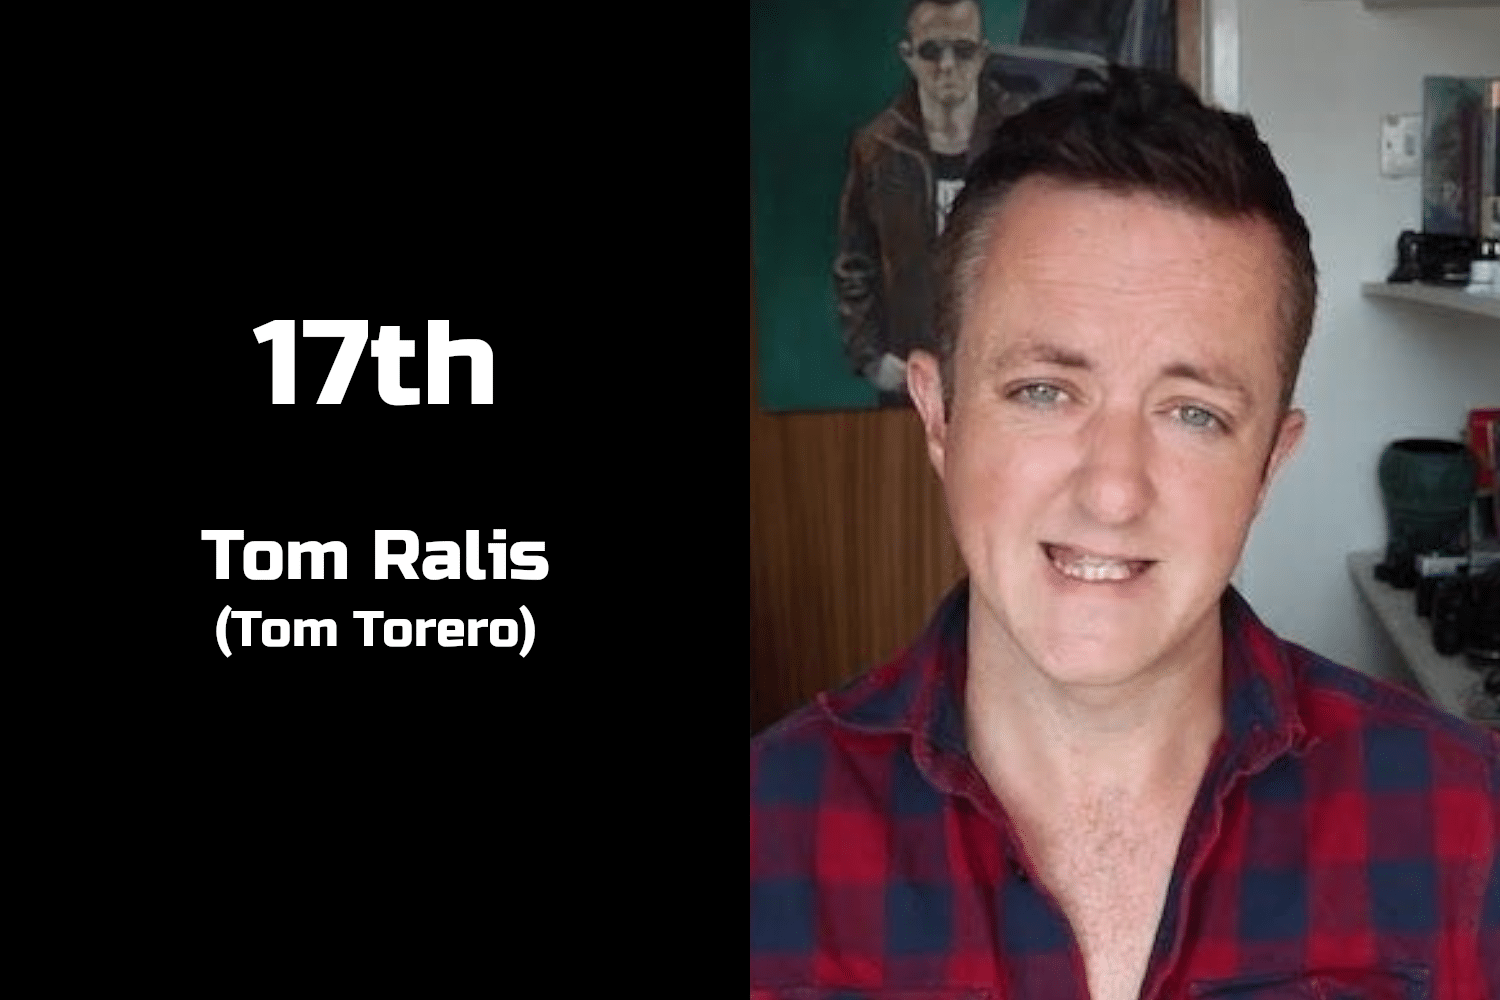 Tom Torero Tom Ralis Danya Hajjaji RIP Tom Torero London Daygame Model Day Game Pickup Artist